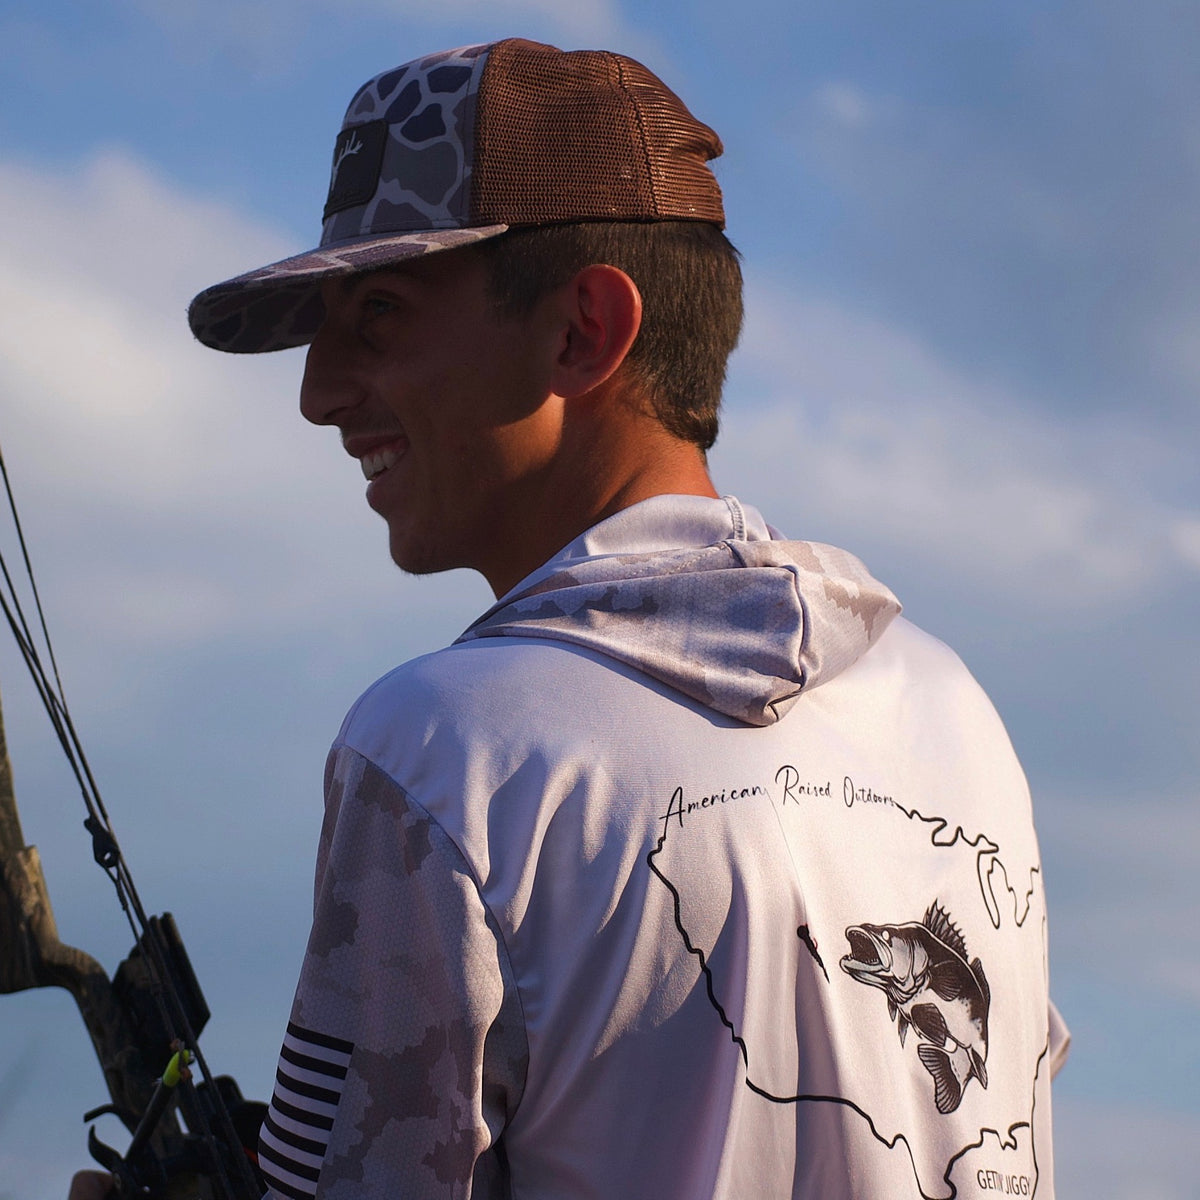 American Raised Outdoors Gettin' Jiggy With It - Performance Fishing Shirt